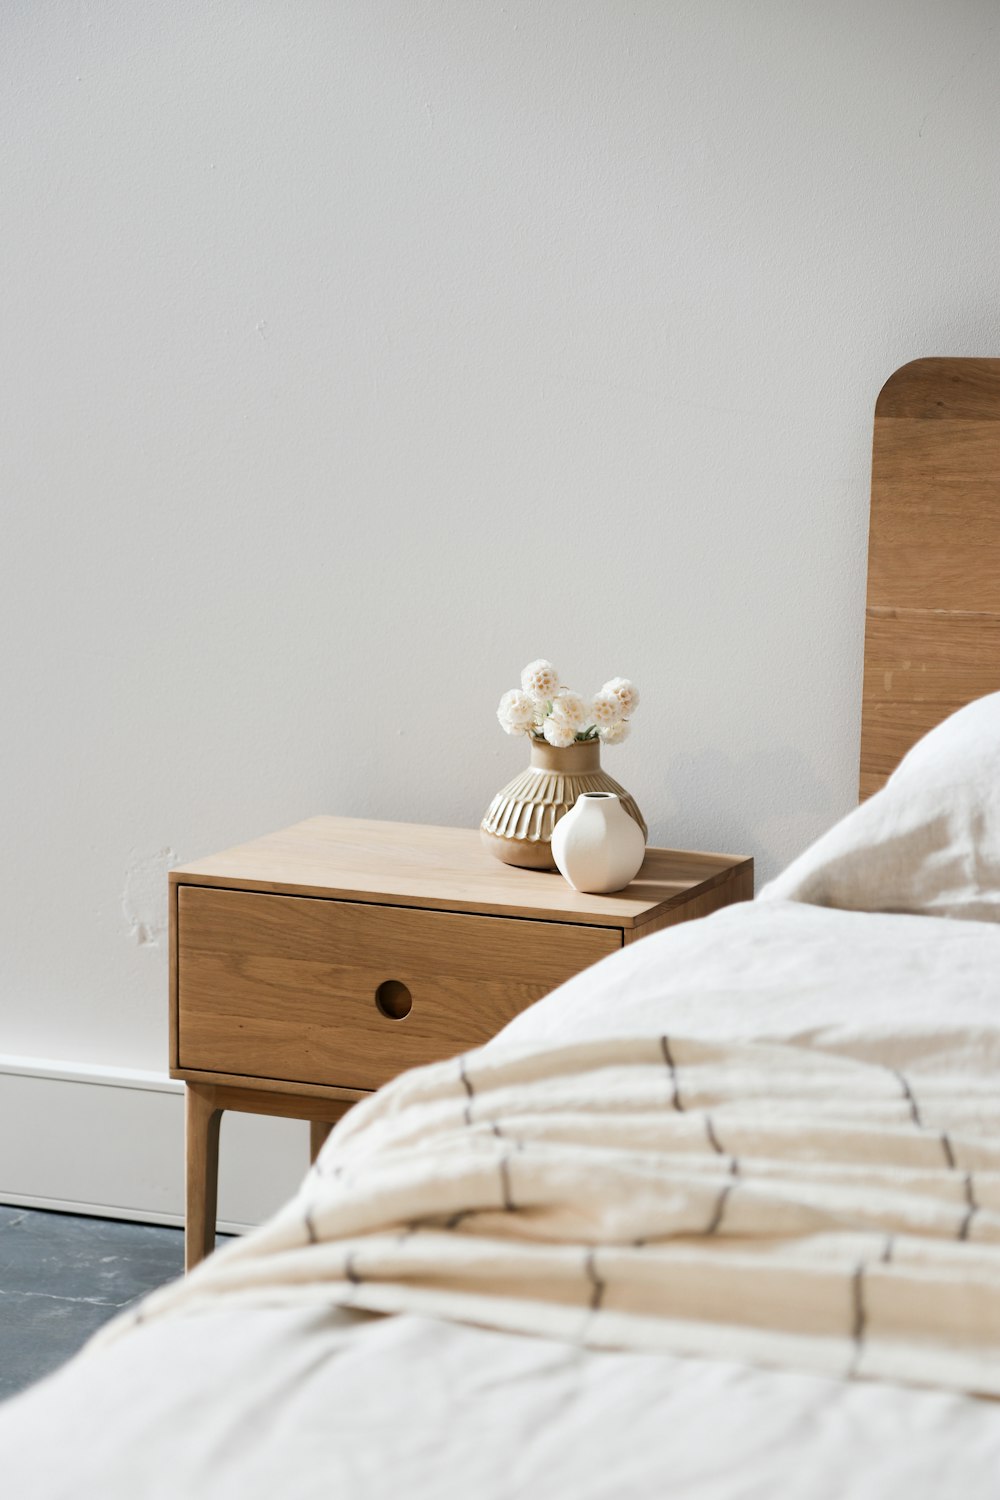 white ceramic rabbit figurine on brown wooden nightstand